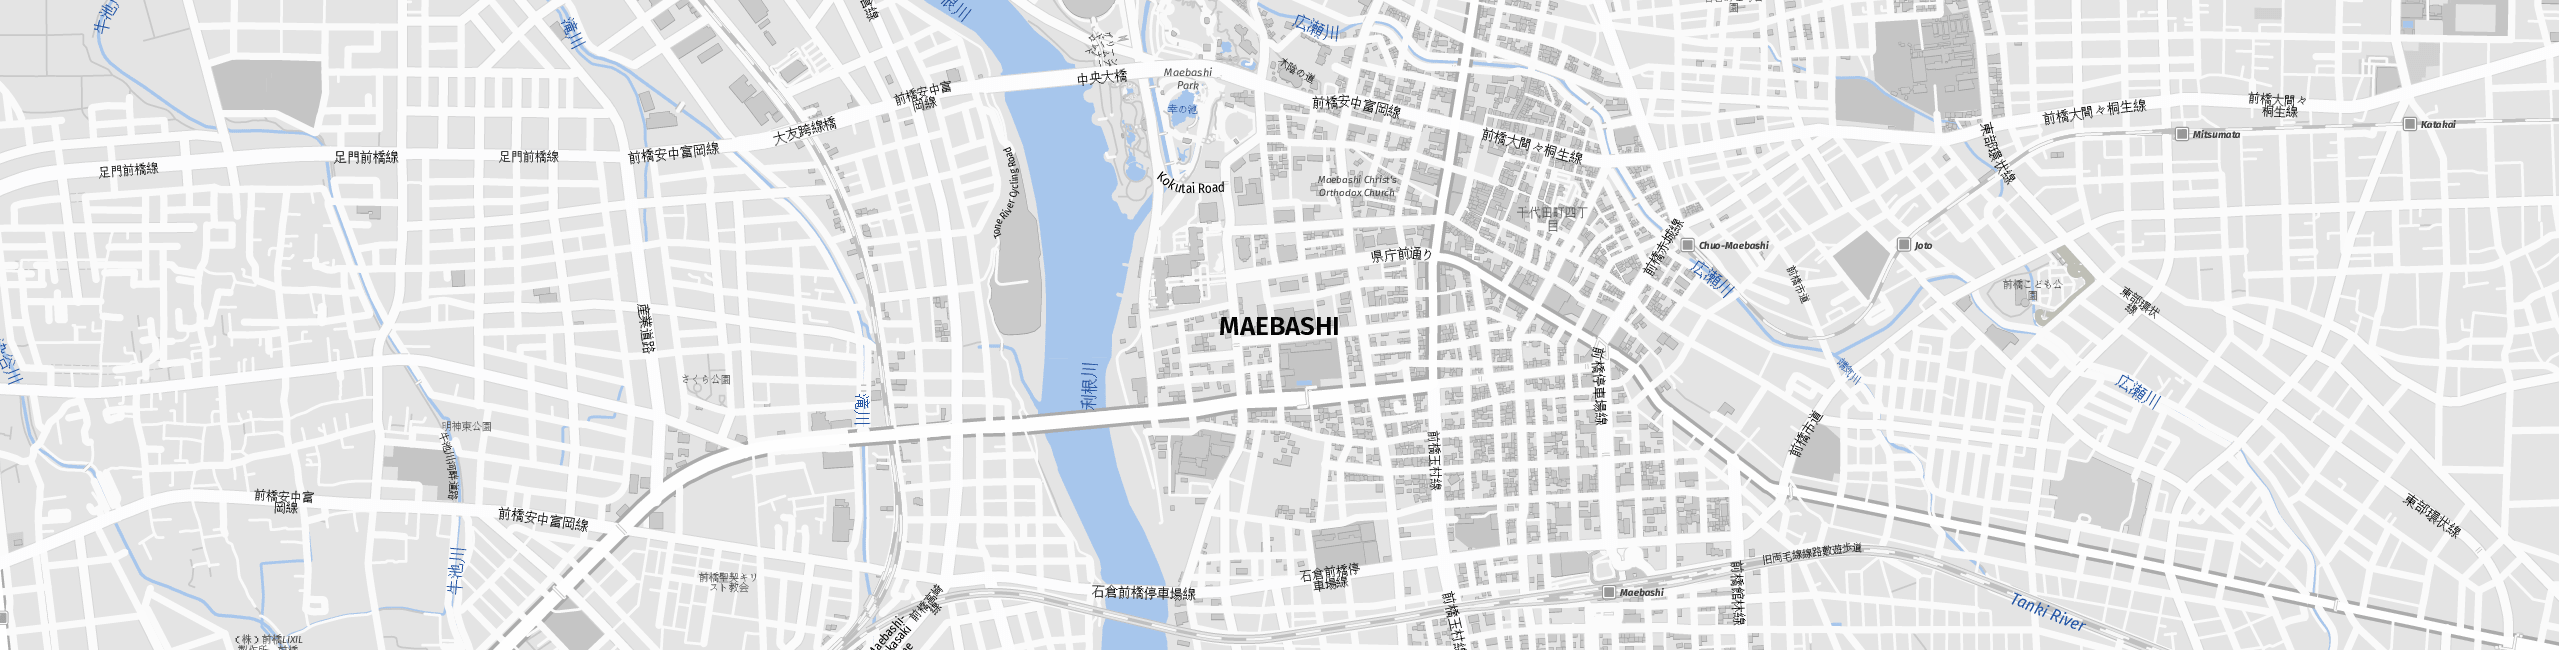 Stadtplan Maebashi zum Downloaden.